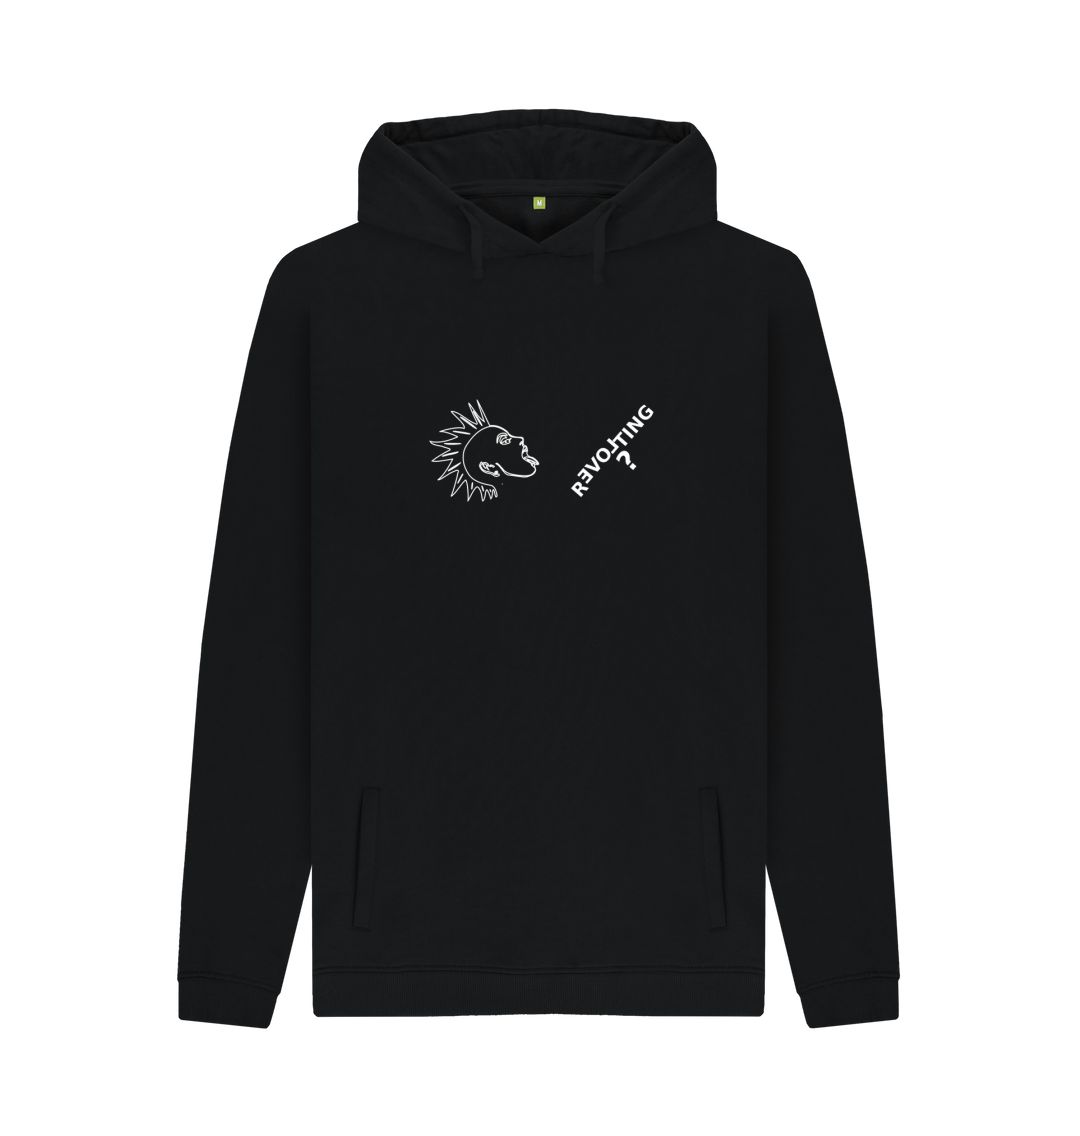 Black Revolting unisex hoodie